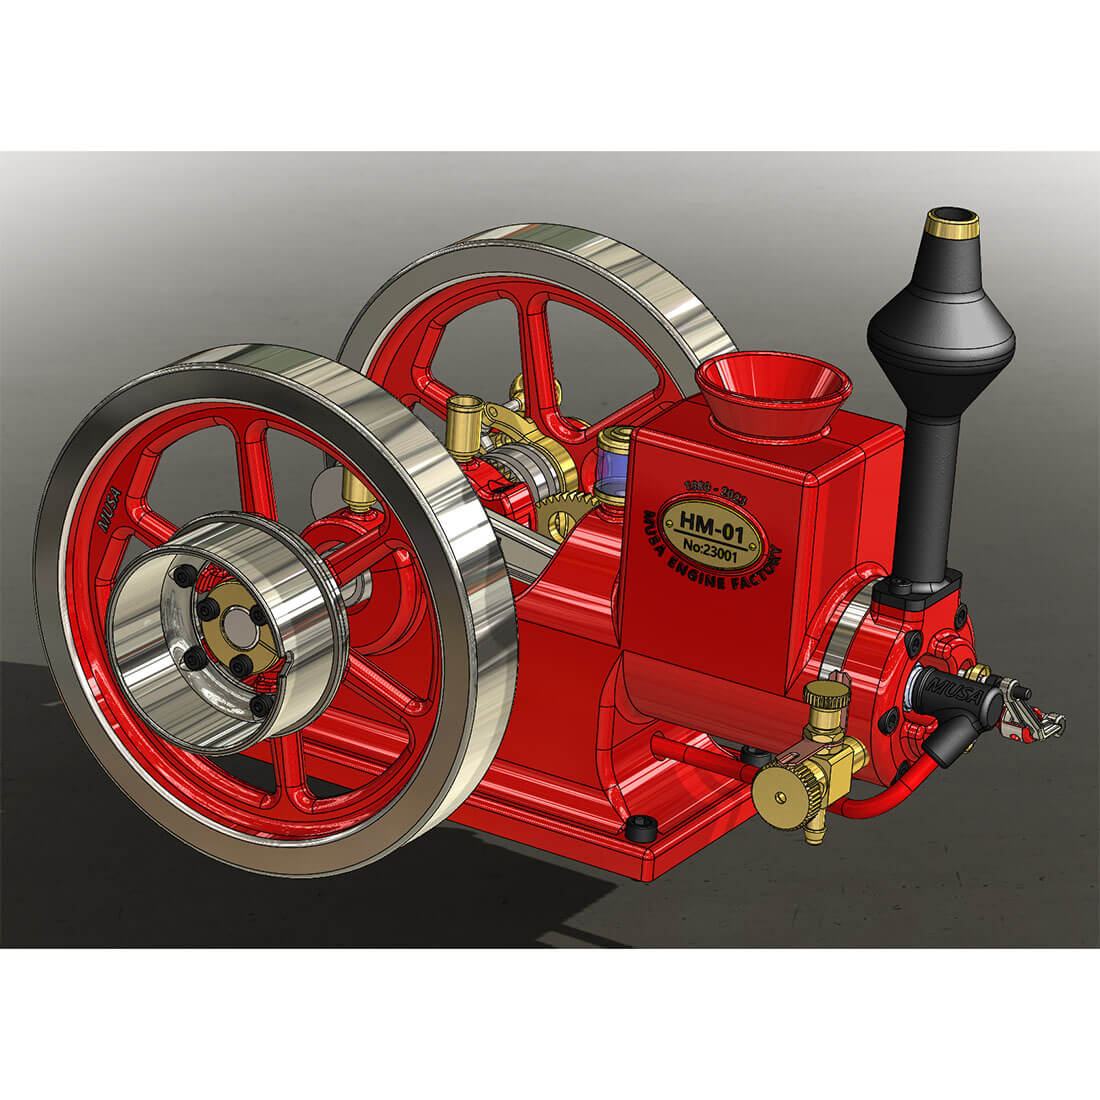 RETROL HM-01 7cc Model Hit and Miss 4-stroke Horizontal Internal Combustion Engine - stirlingkit